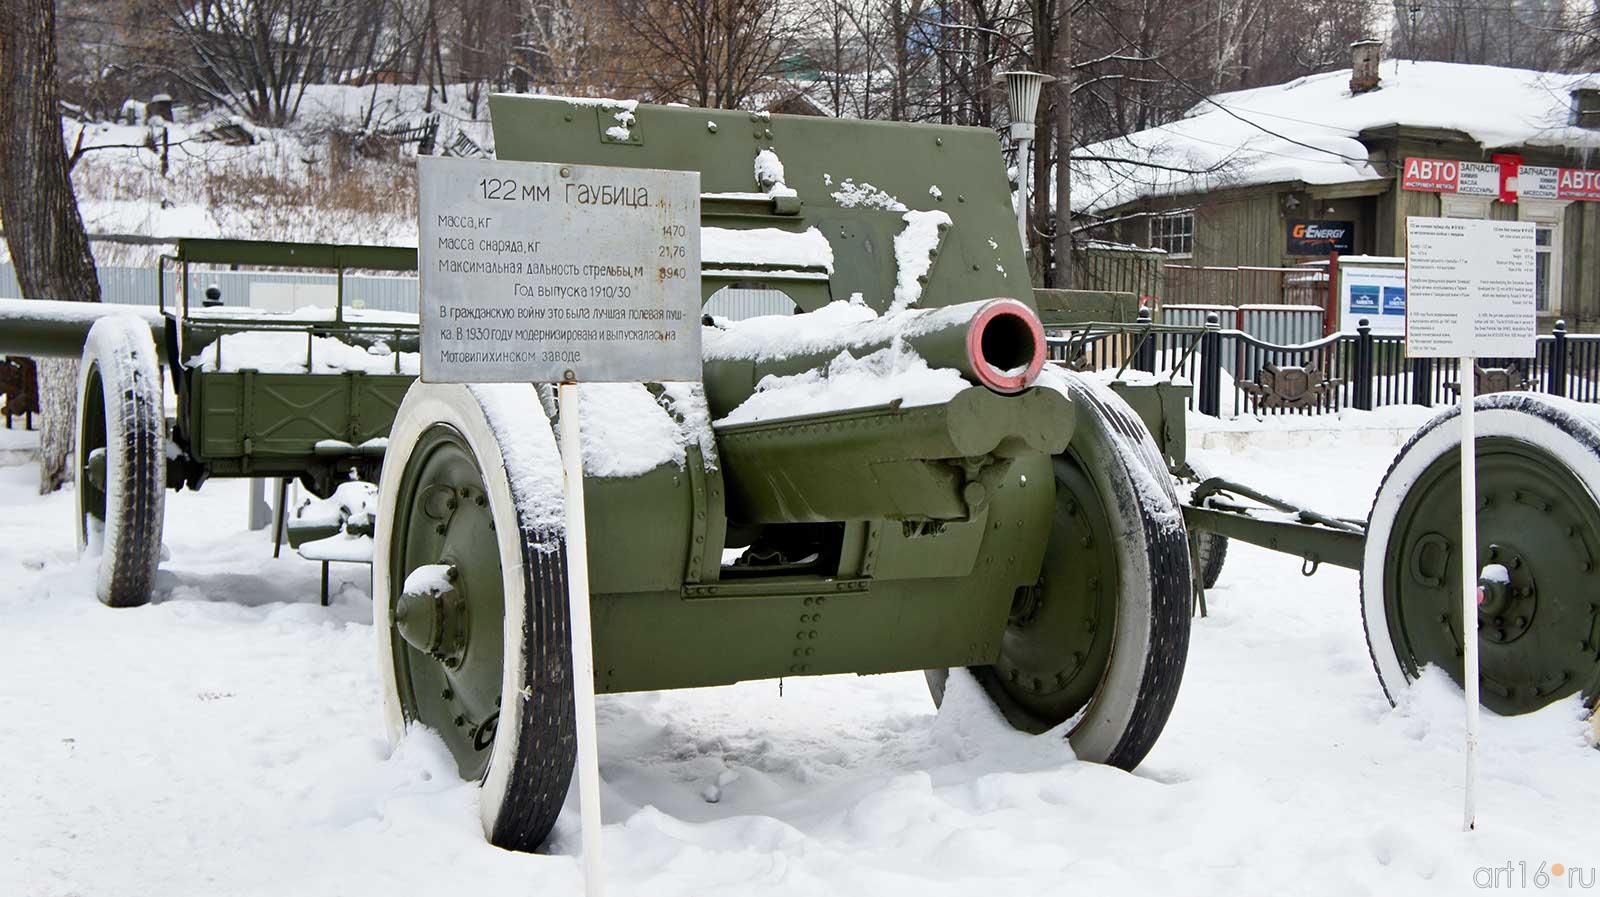 122 мм Гаубица, г.в. 1910-1930::Мотовилиха